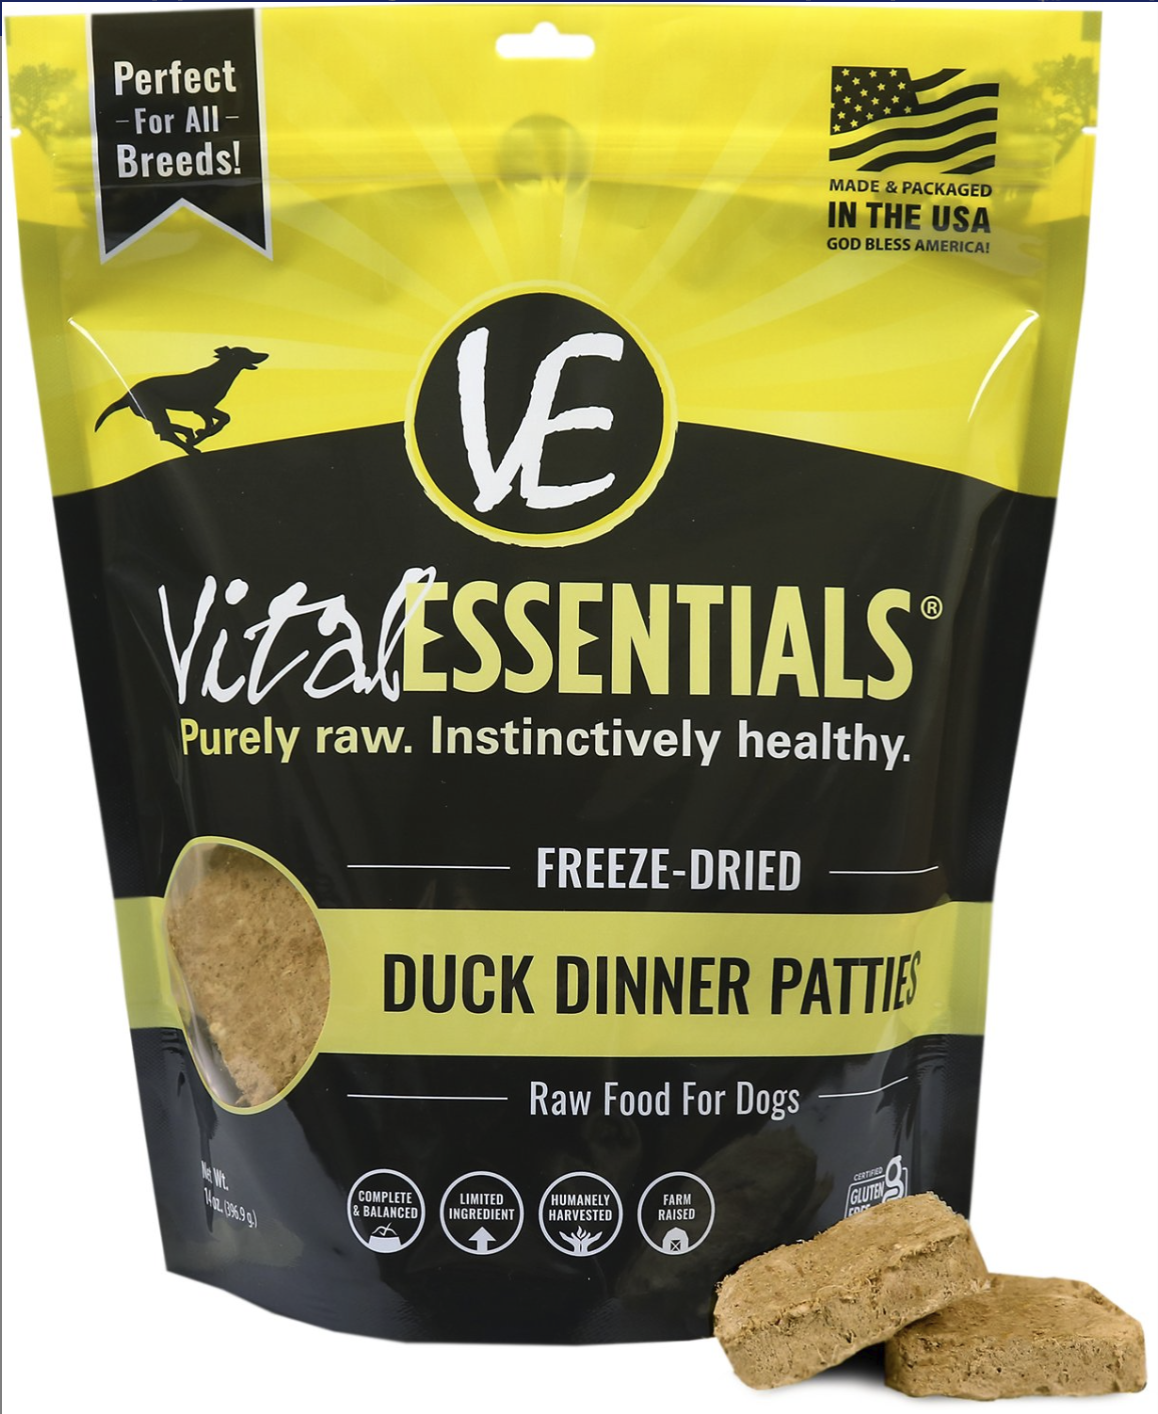 VE Vital Essentials Duck Dinner Patties Freeze-Dried Grain Free Dog Food -  14oz - 狗狗无谷物鸭肉冻干肉饼